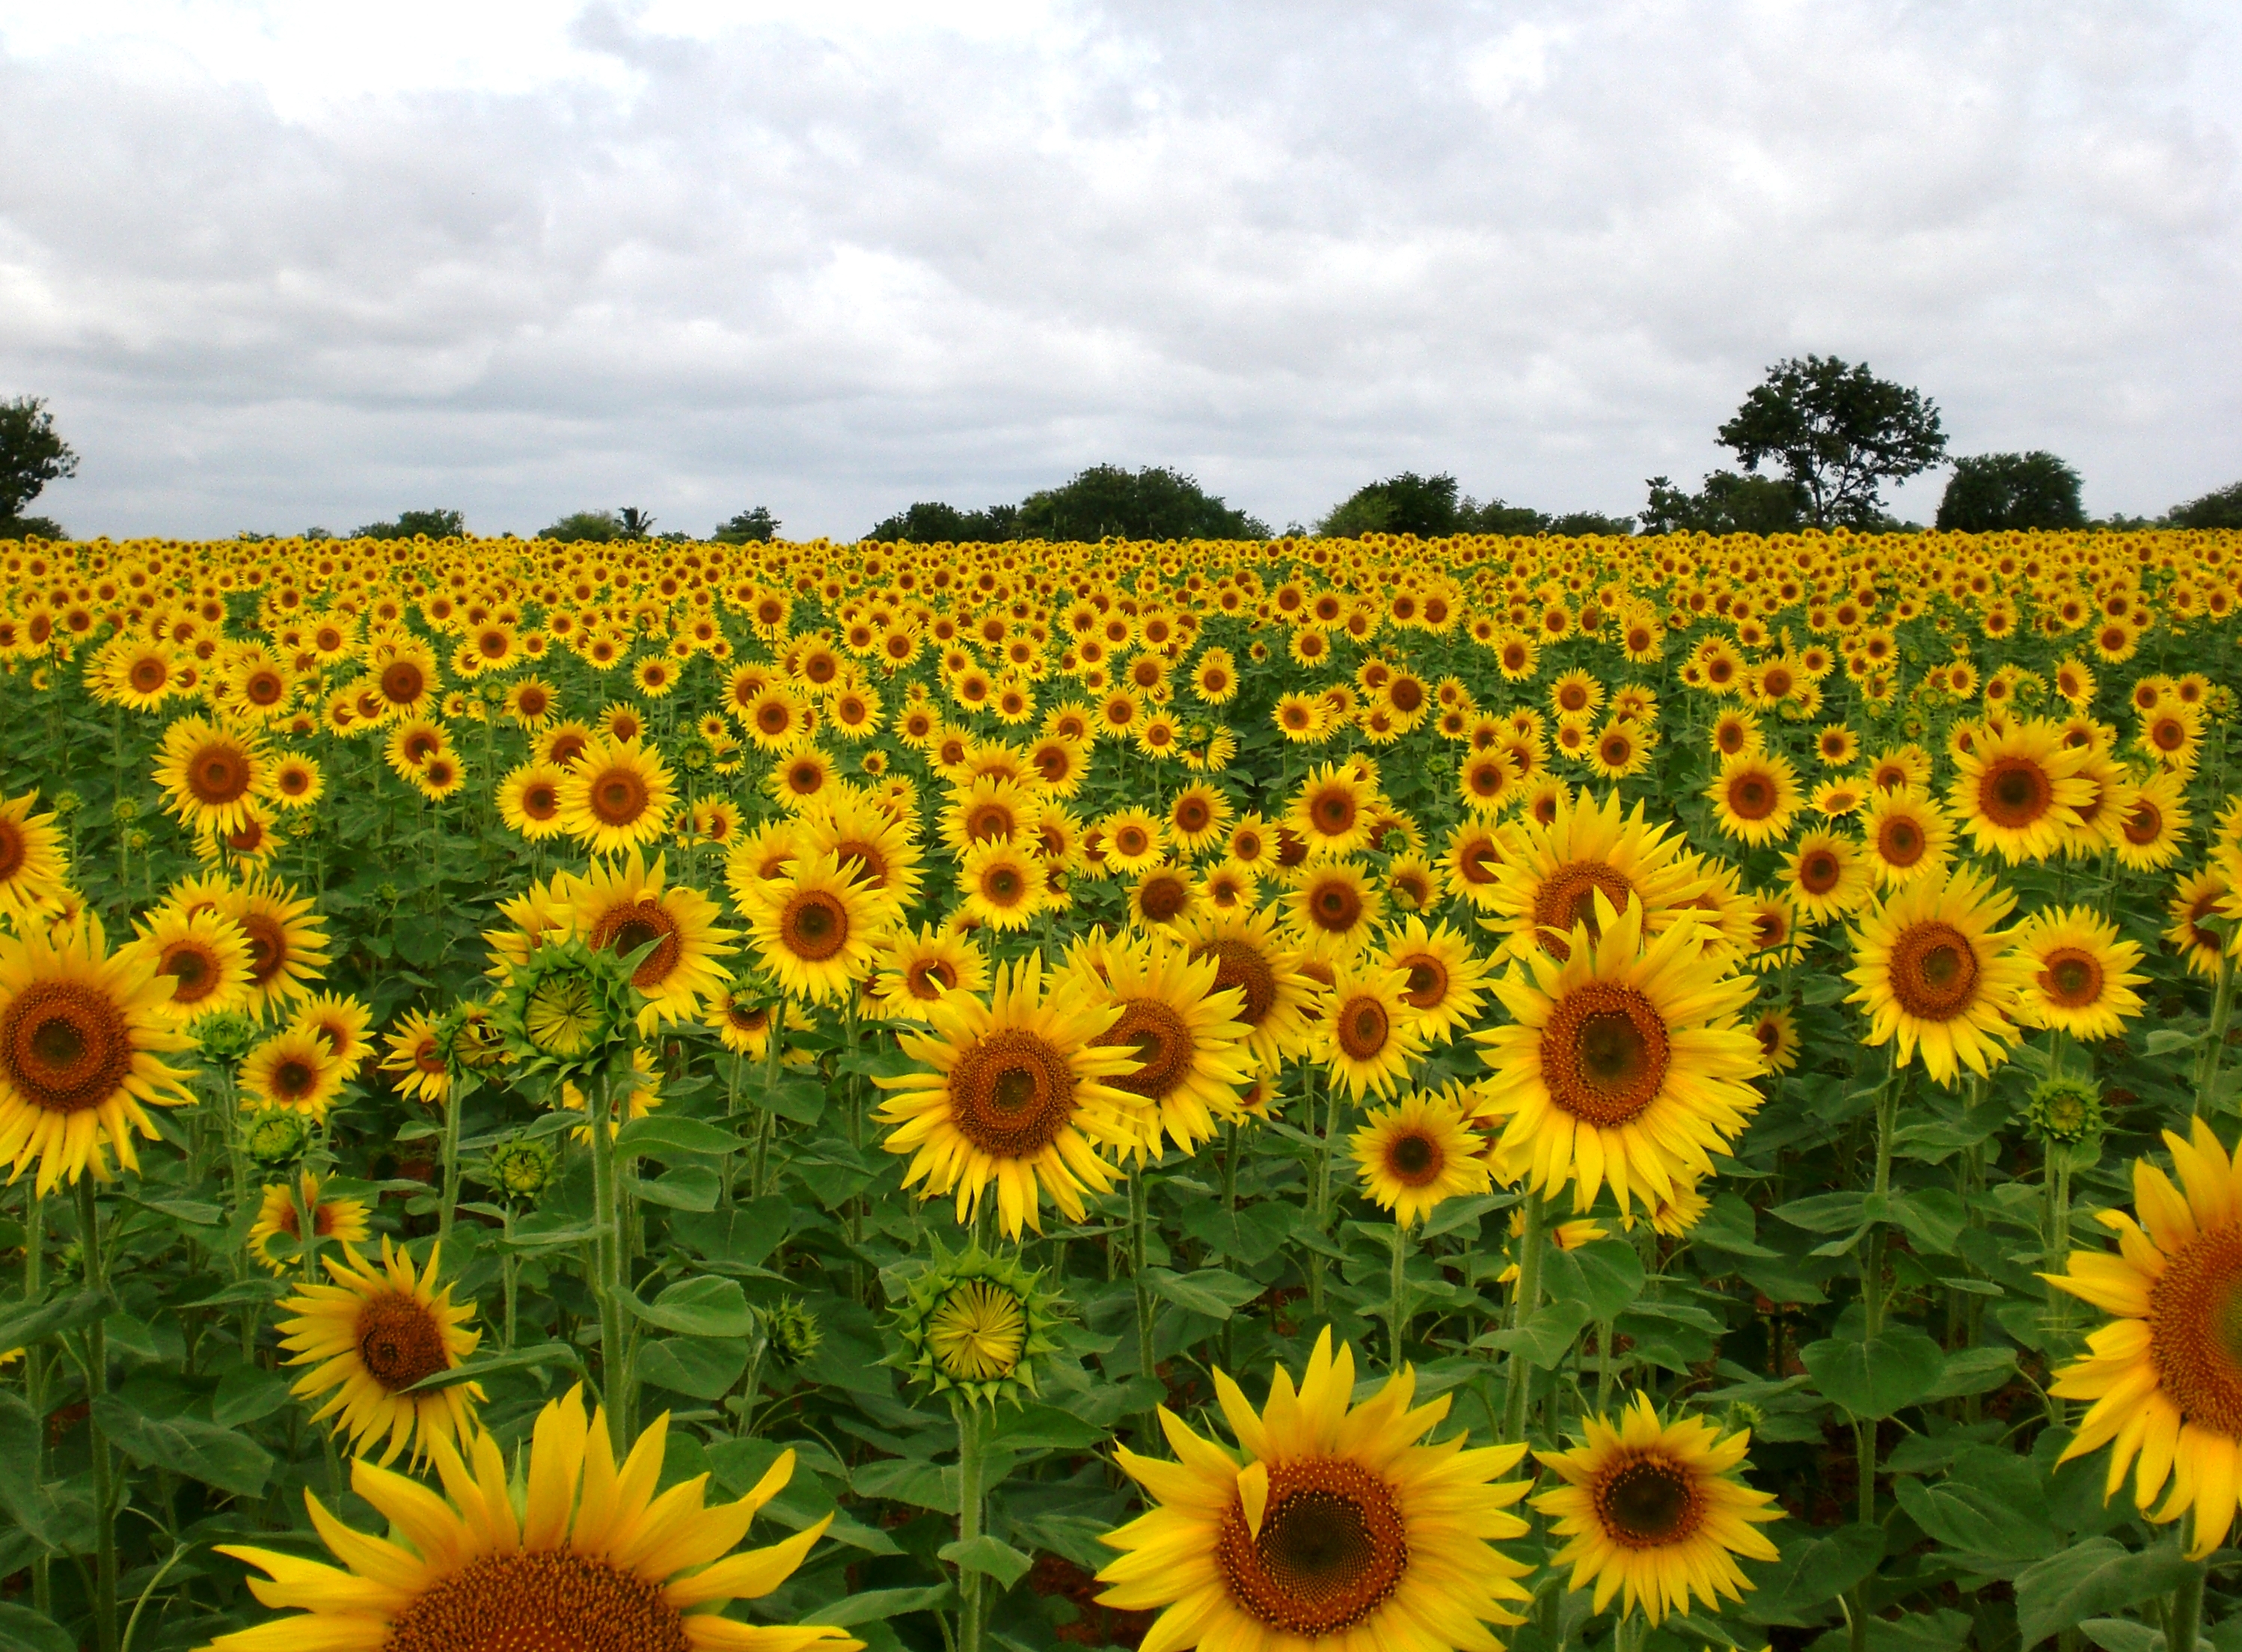 Sunflower Field near Raichur, India